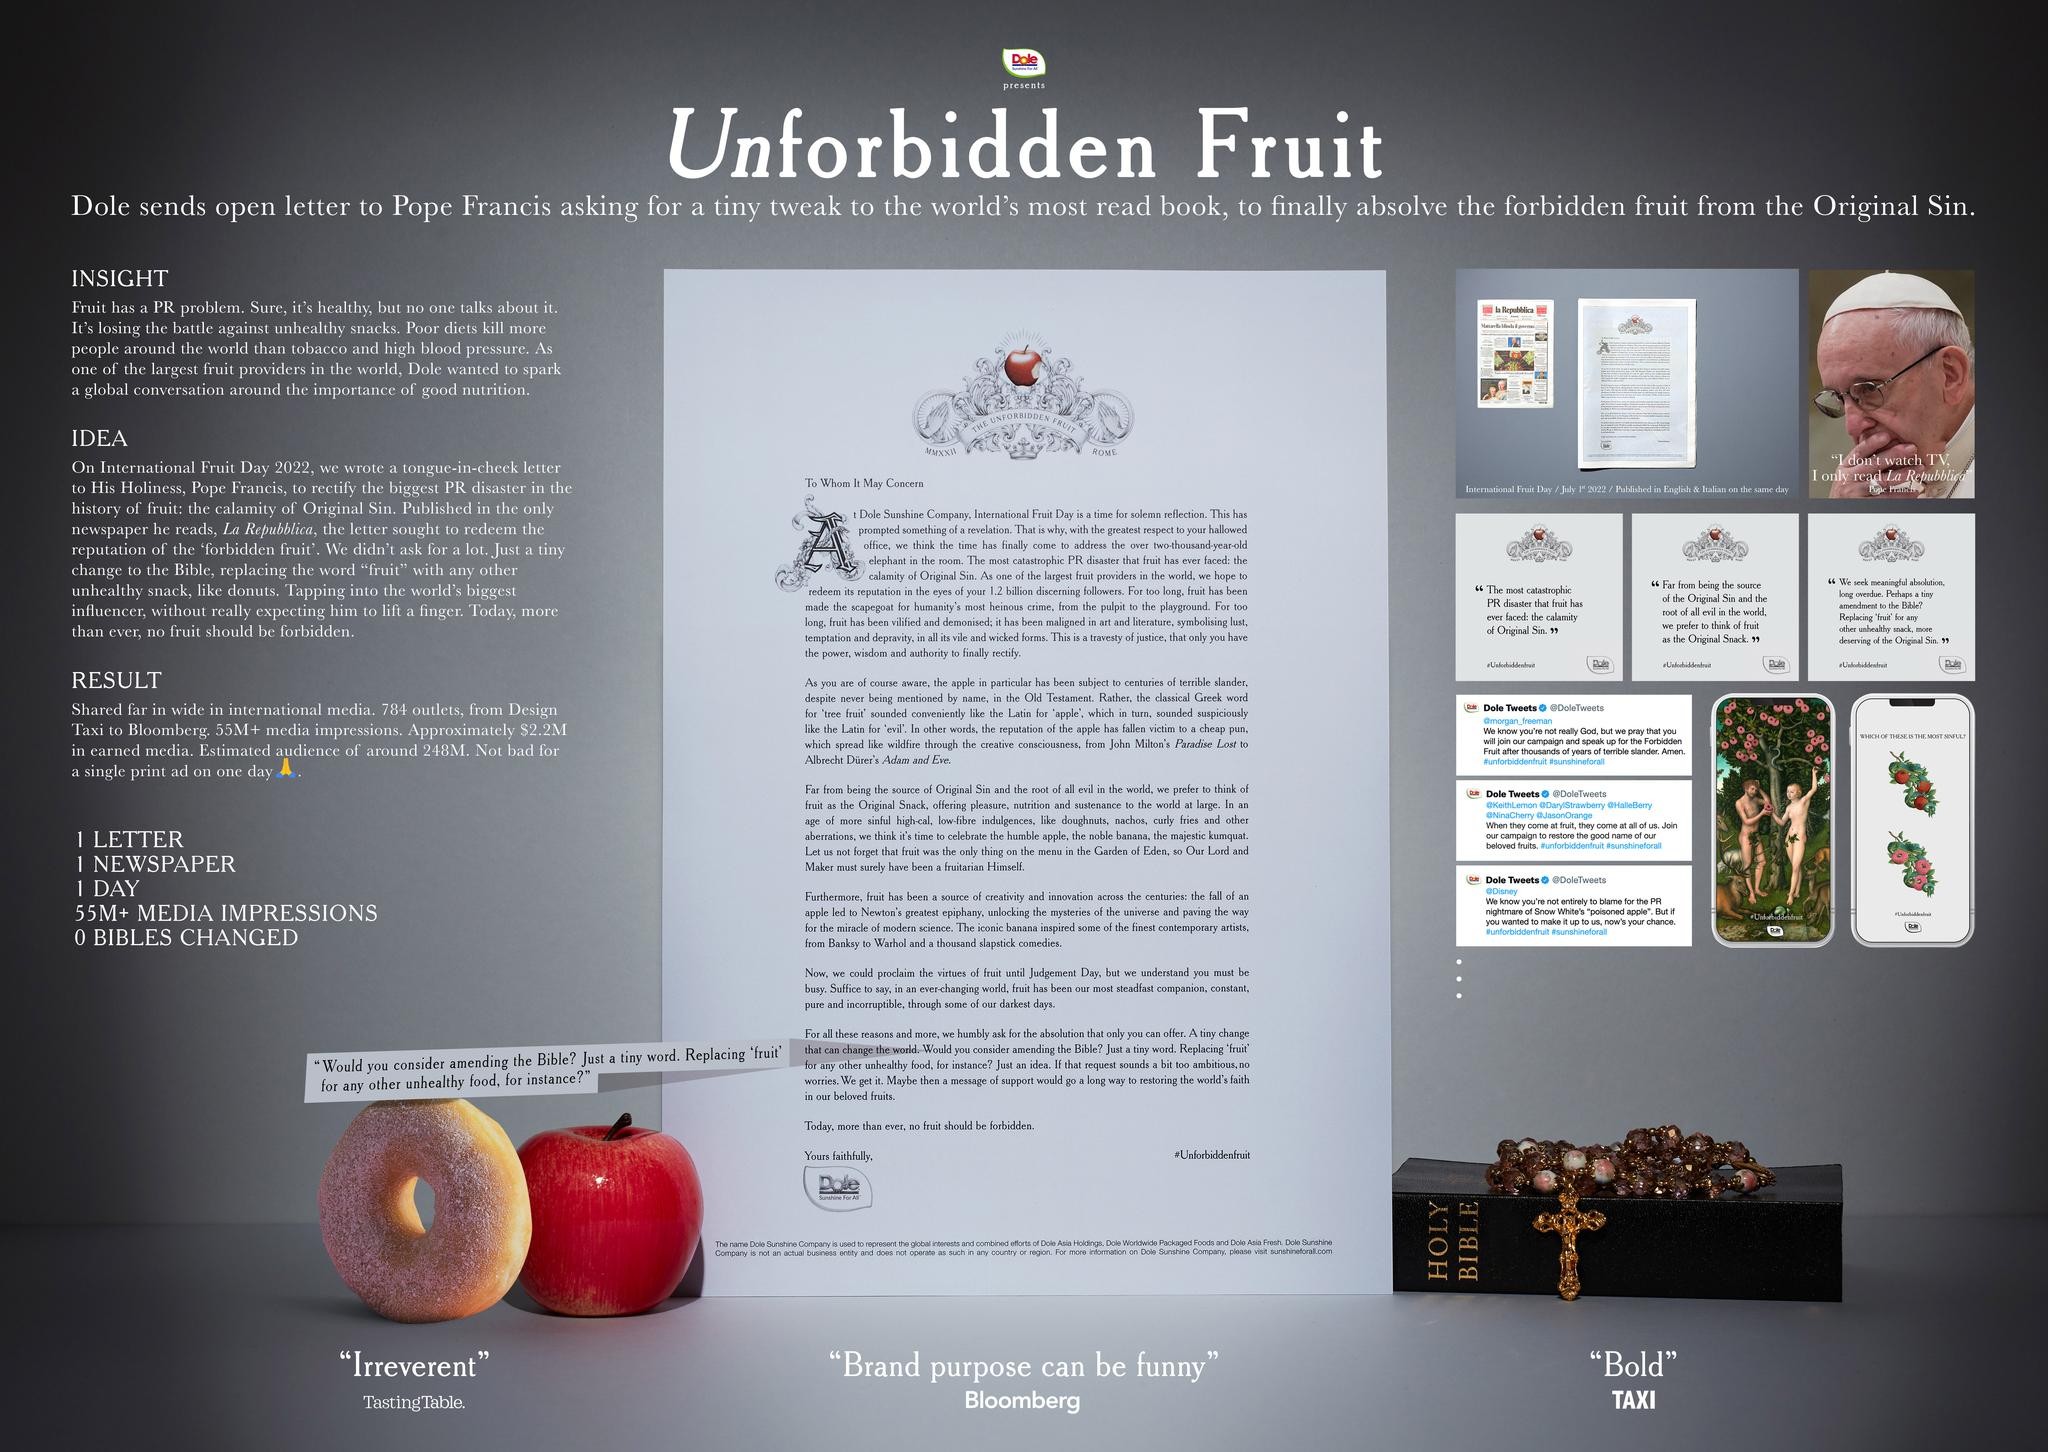 The Unforbidden Fruit